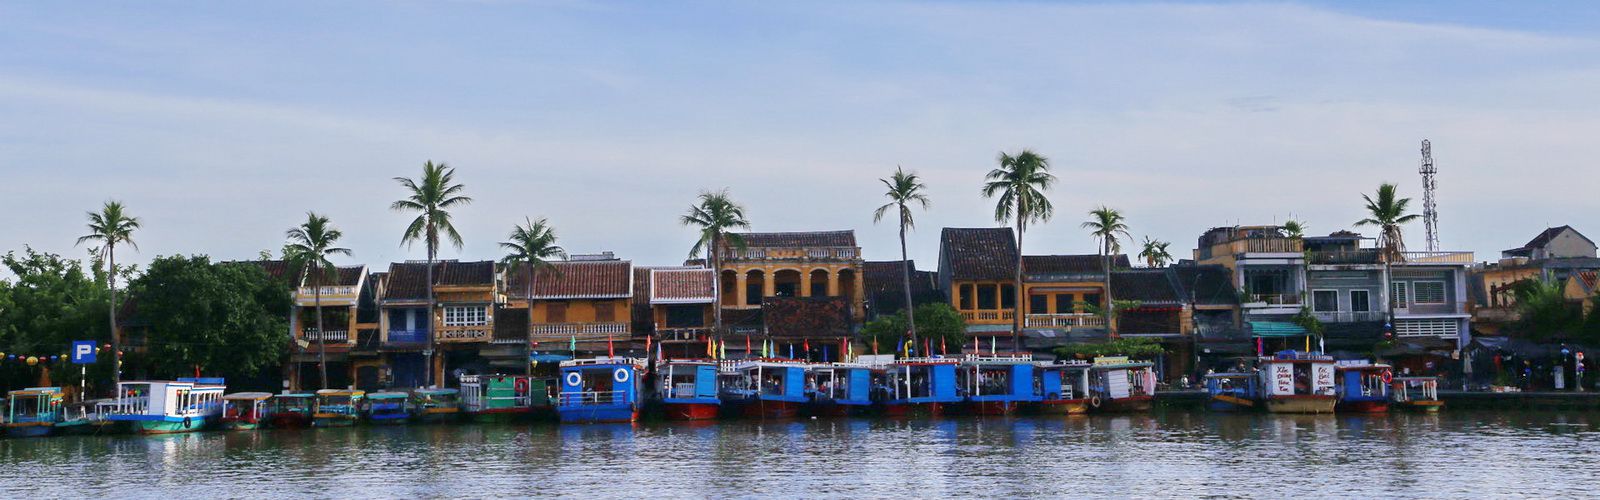 Places To Go in Vientiane